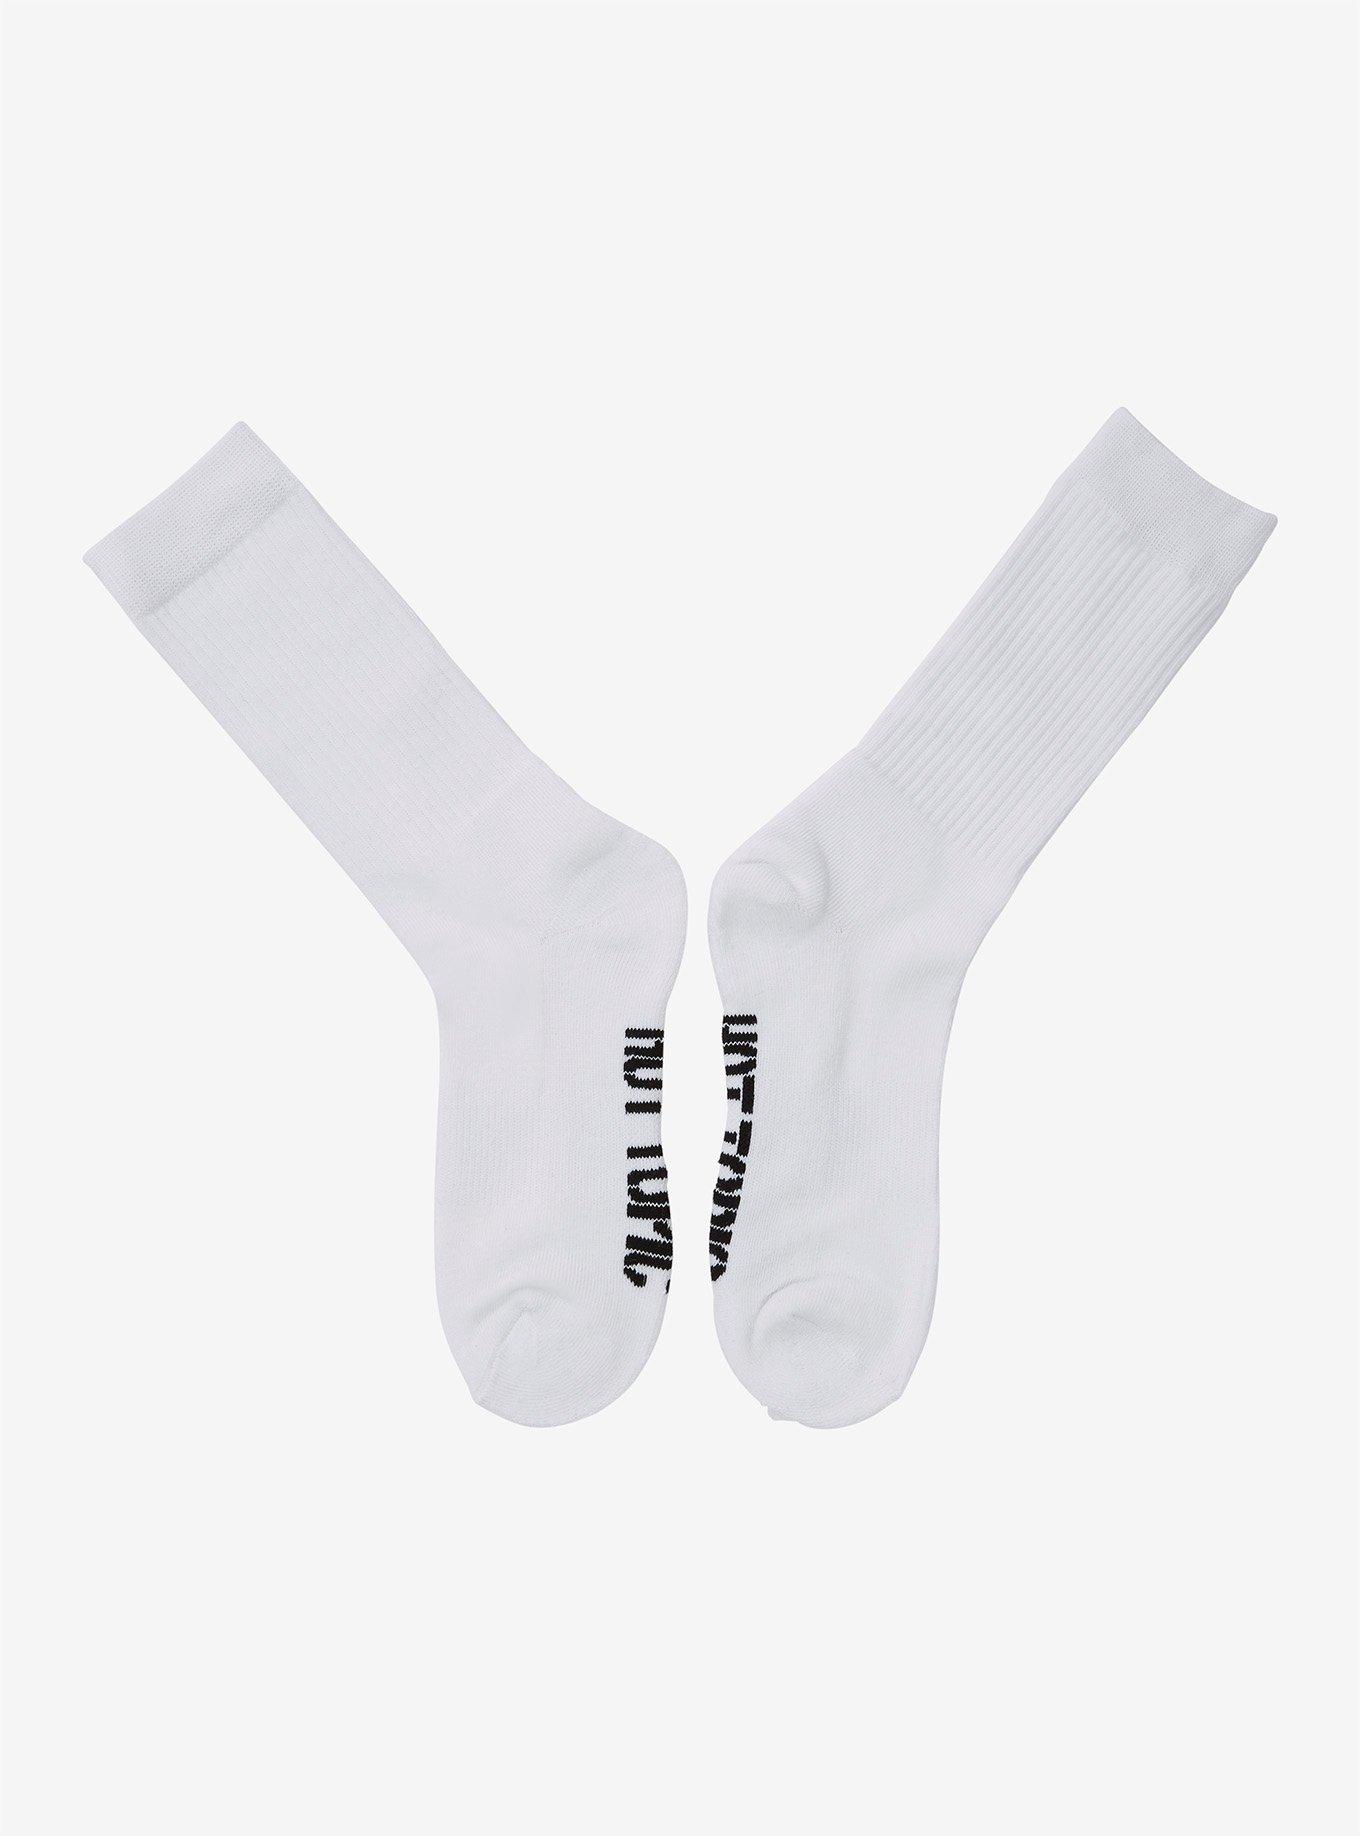 Hot Topic White Crew Socks, , hi-res